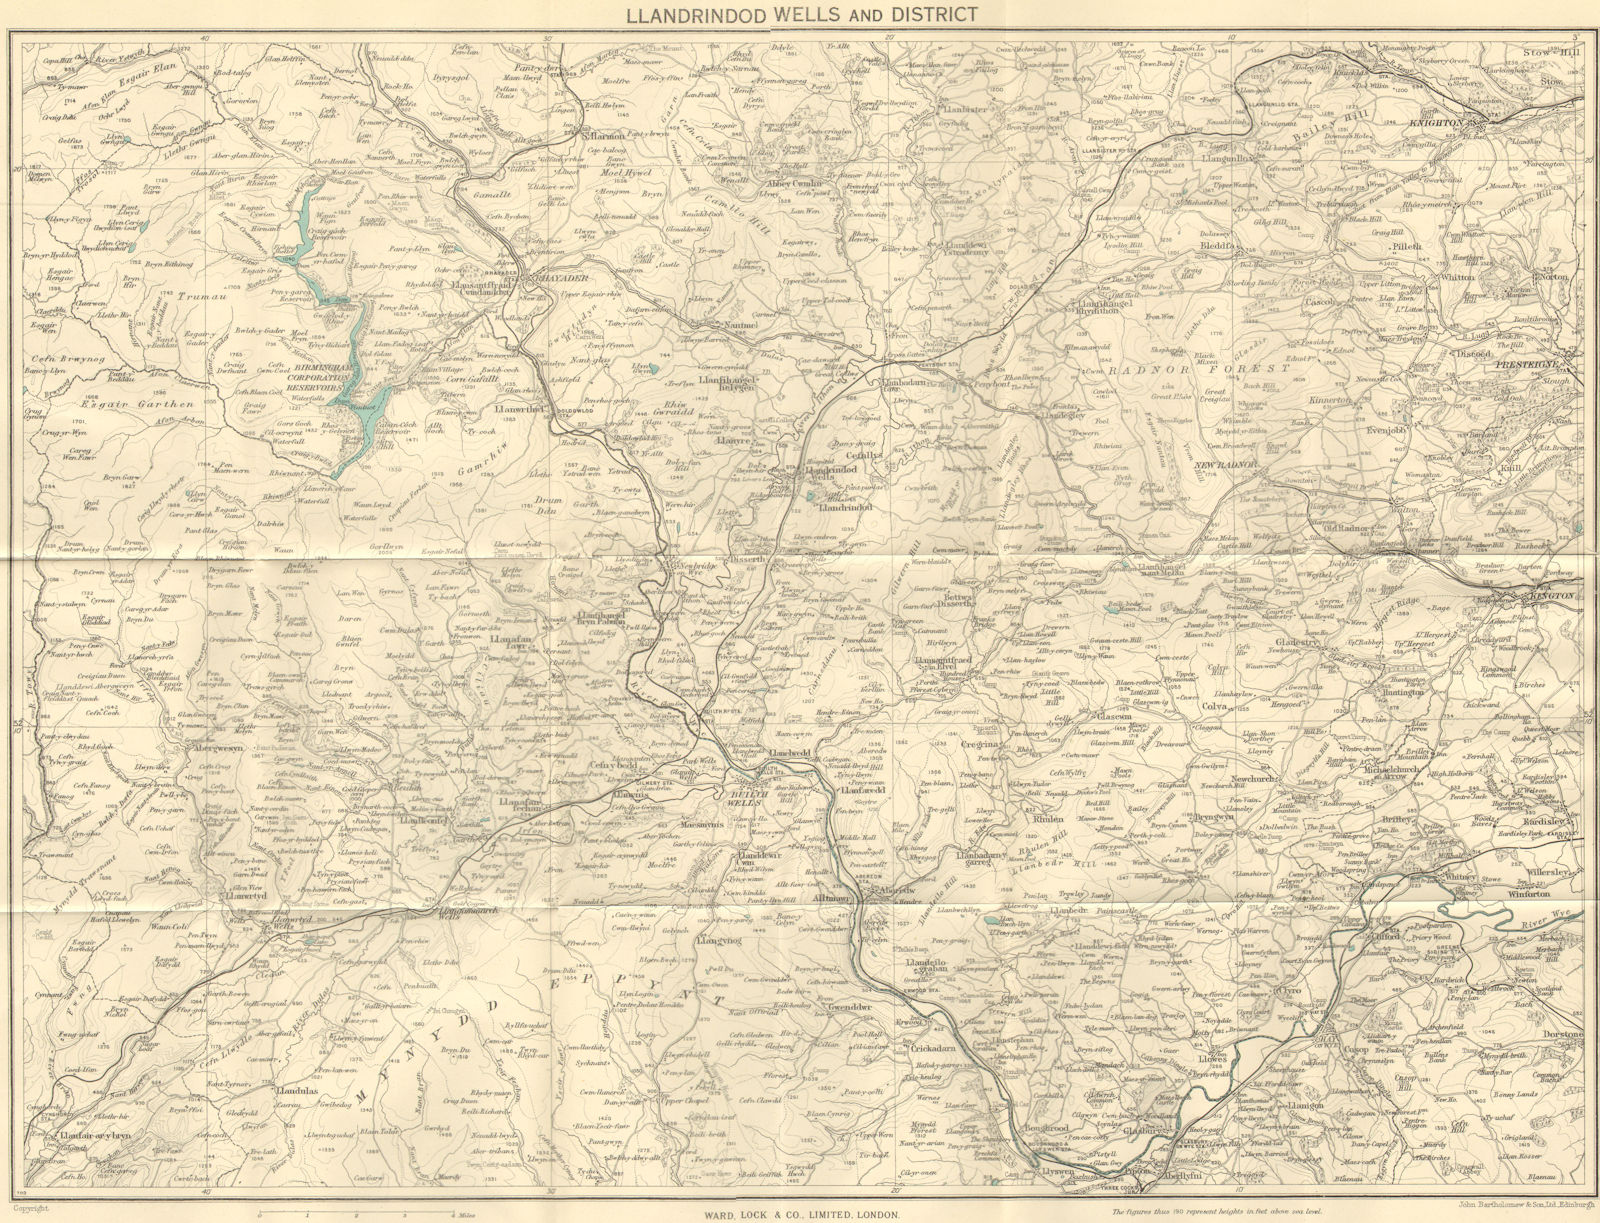 BUILTH & LLANDRINDOD WELLS. Rhayader Presteigne Knighton Radnor Forest c1950 map